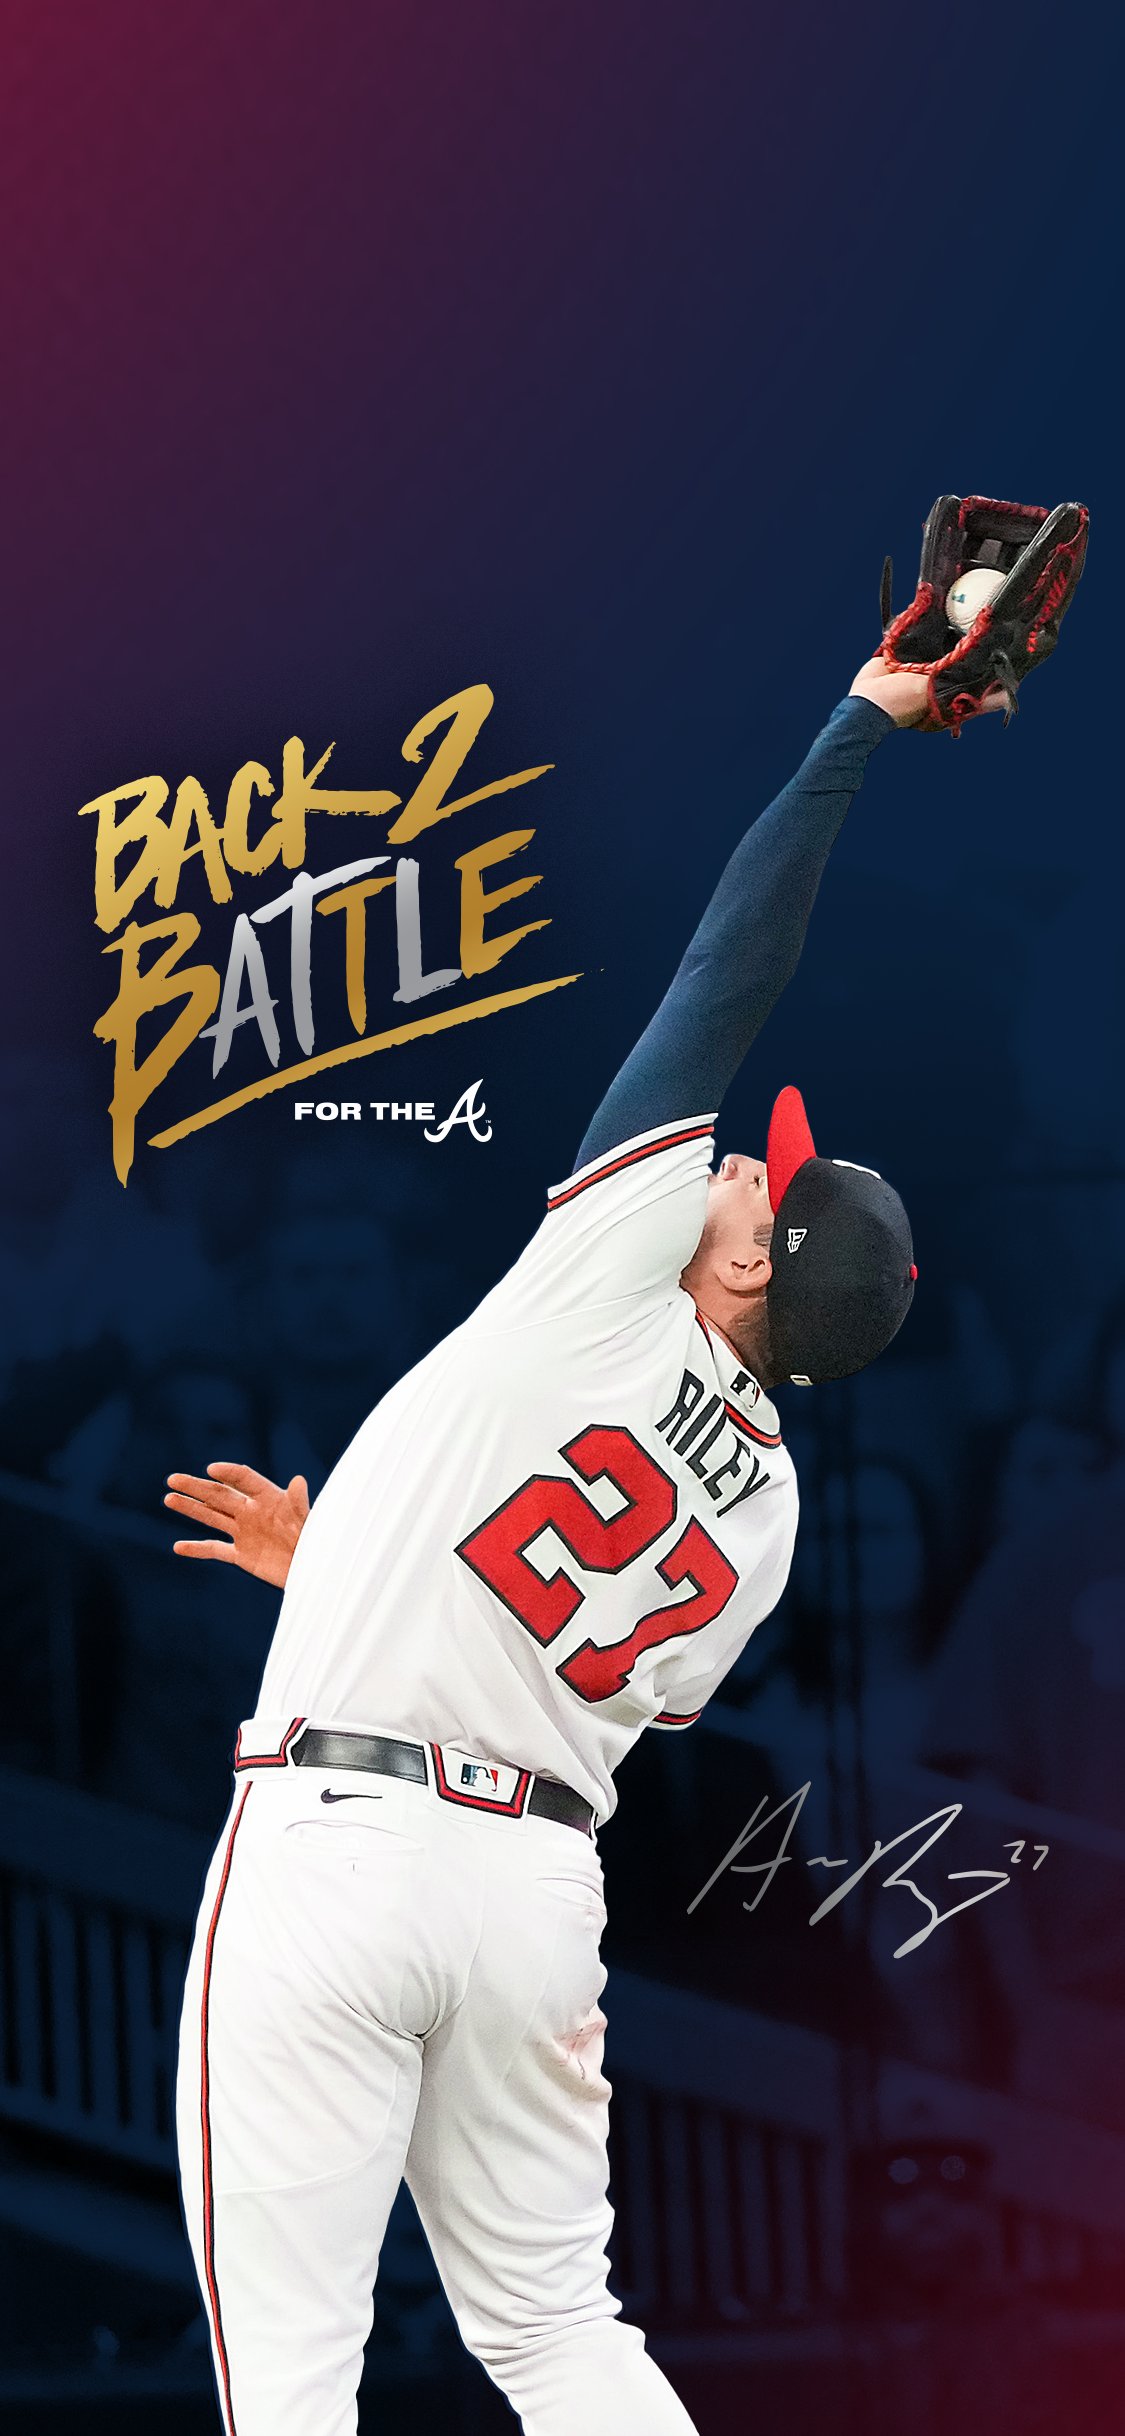 Atlanta Braves on X: #WallpaperWednesday on a Thursday. 😍 #Back2Battle   / X